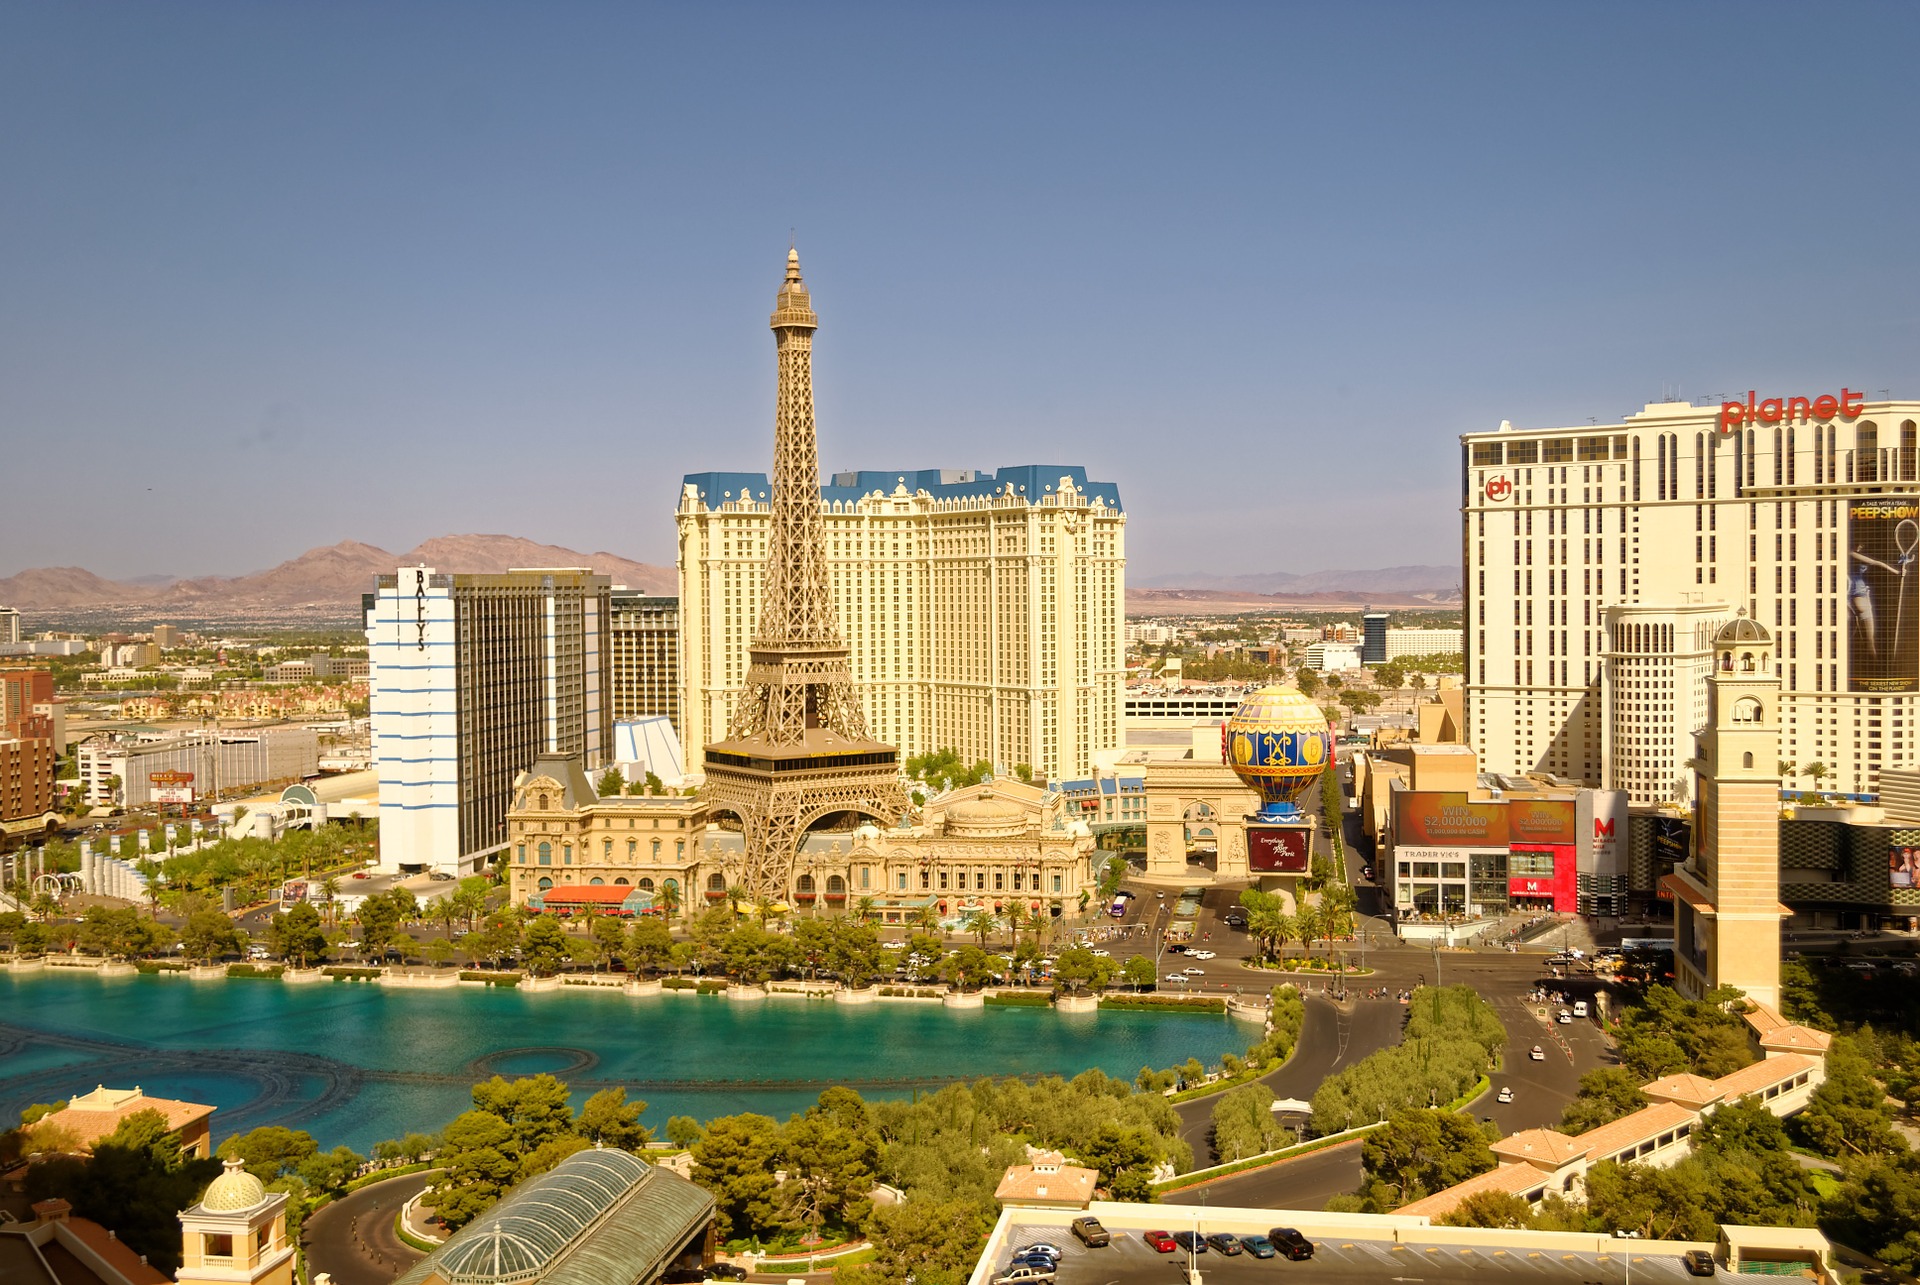 Paris Hotel Las Vegas  Best Themed Luxury Hotel On The Strip 2021 